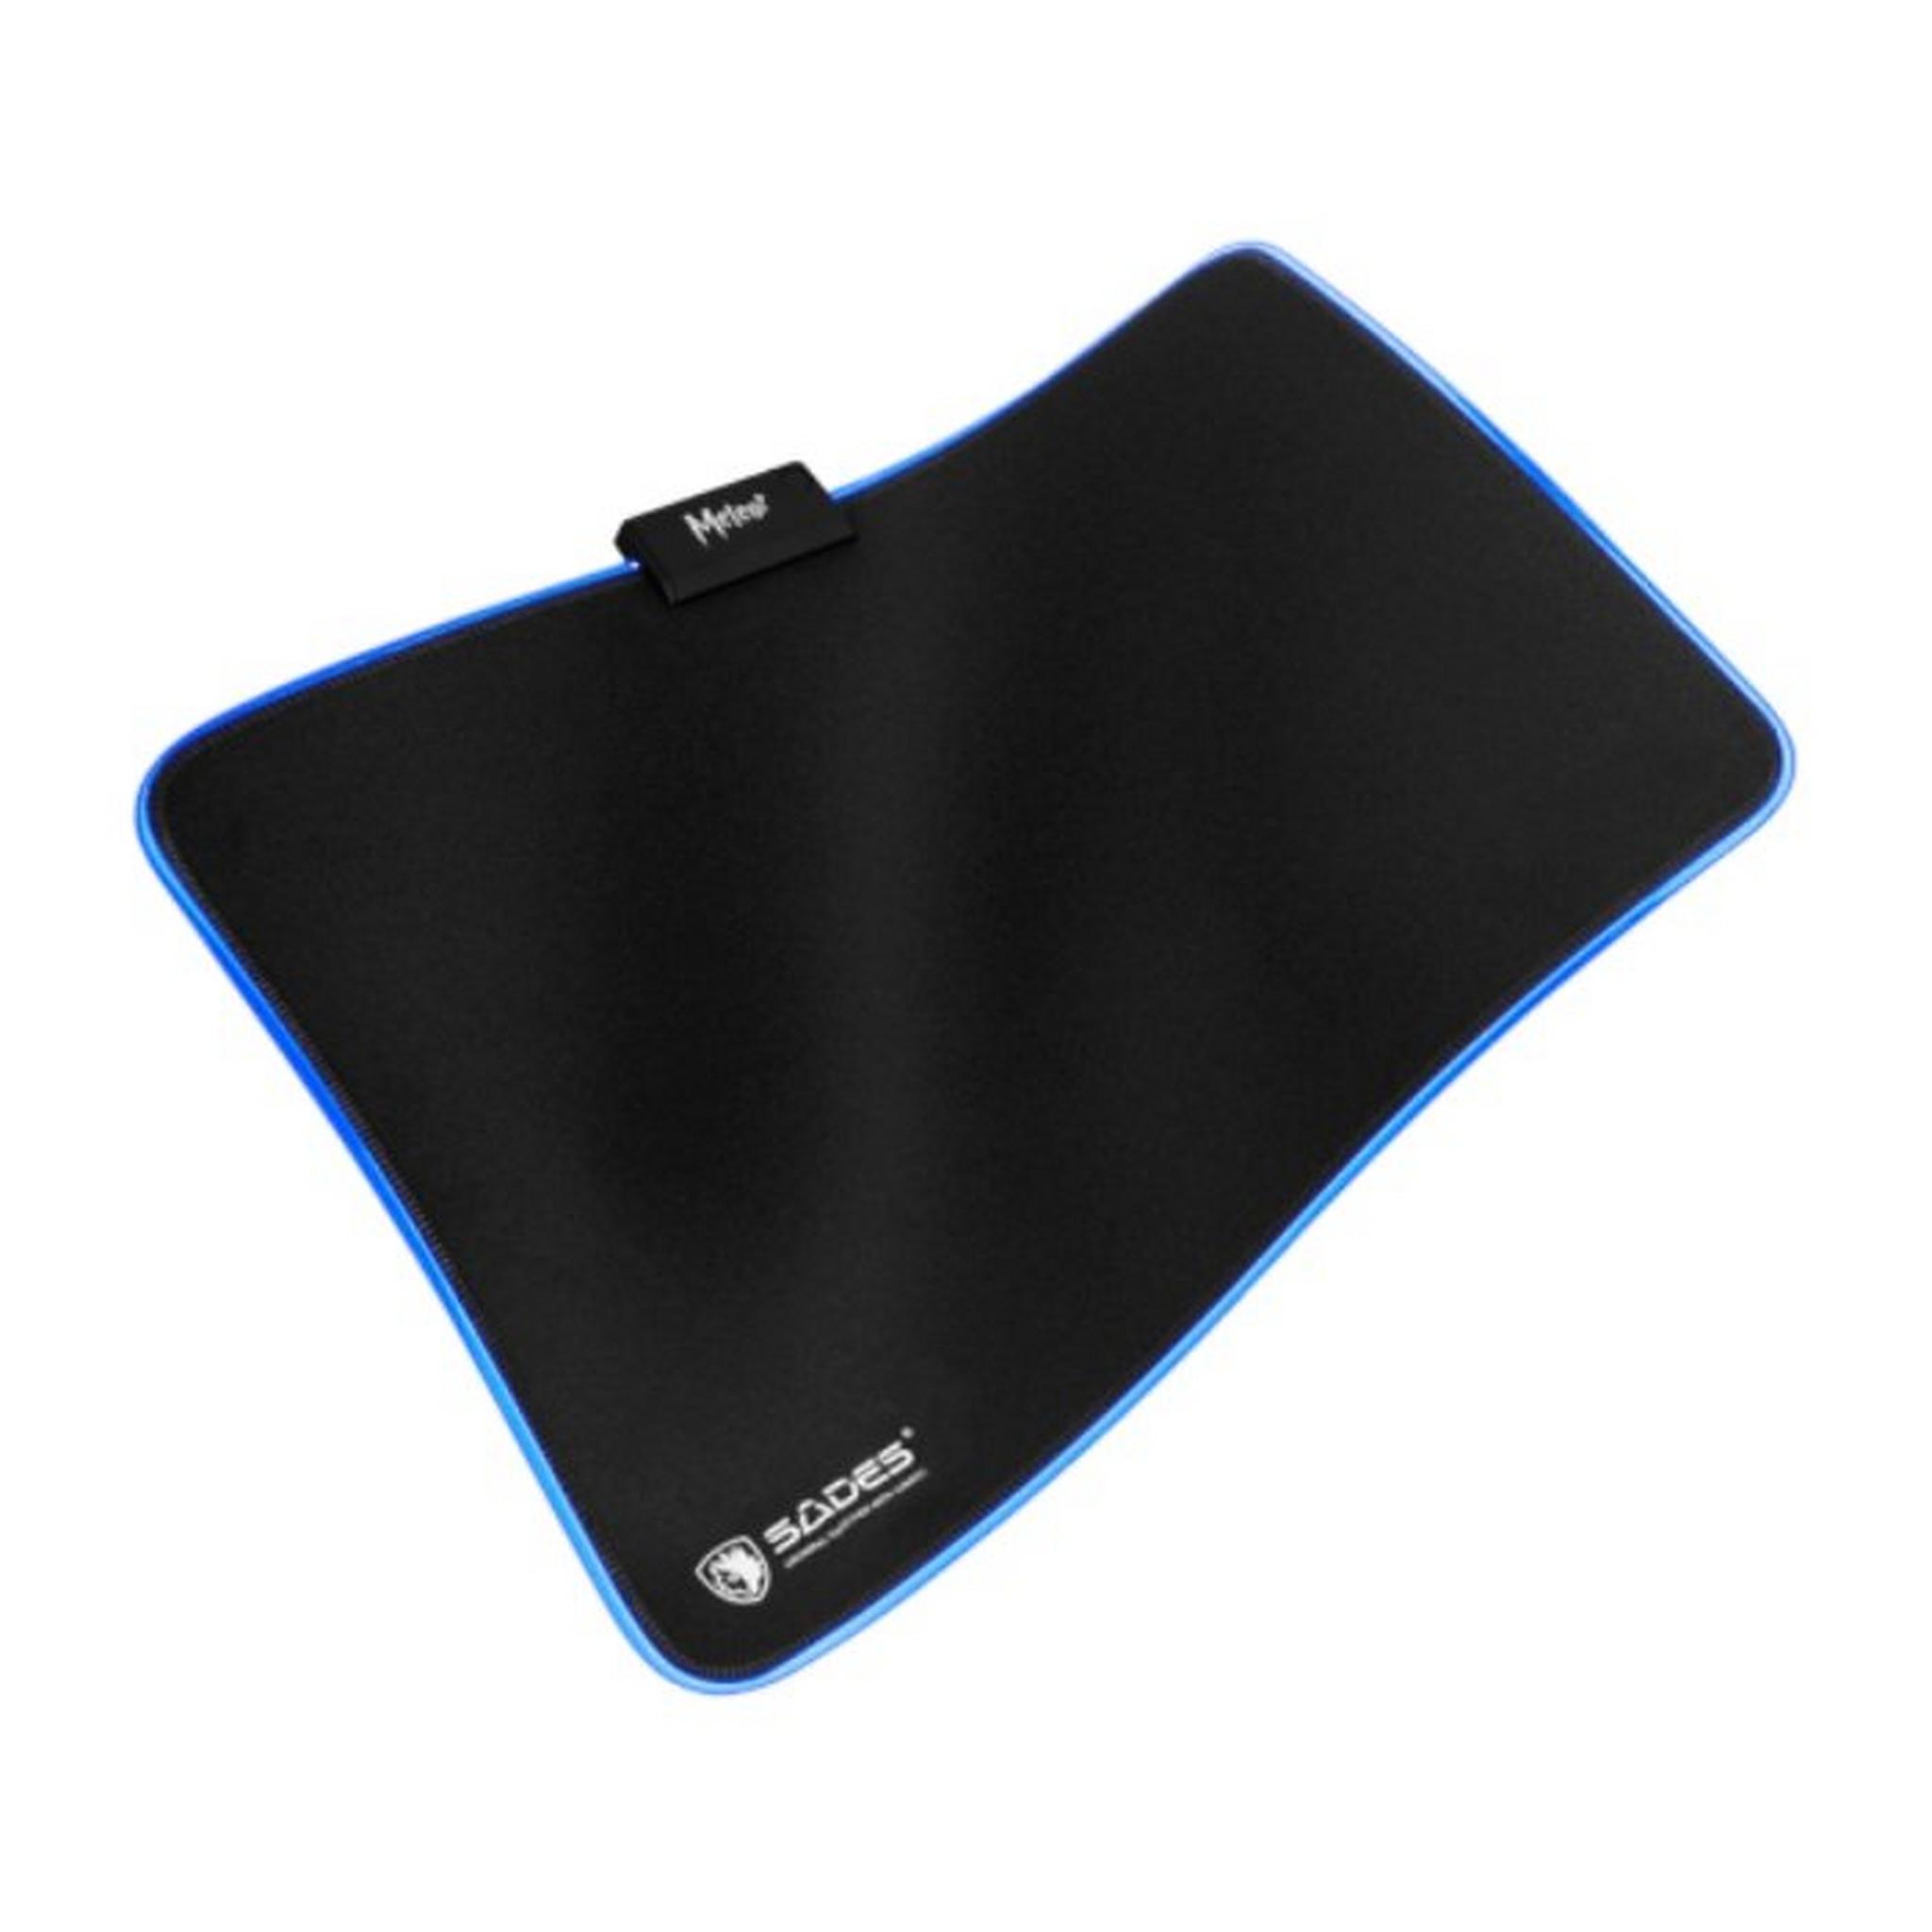 Sades Meteor RGB Gaming Mouse Pad - Black